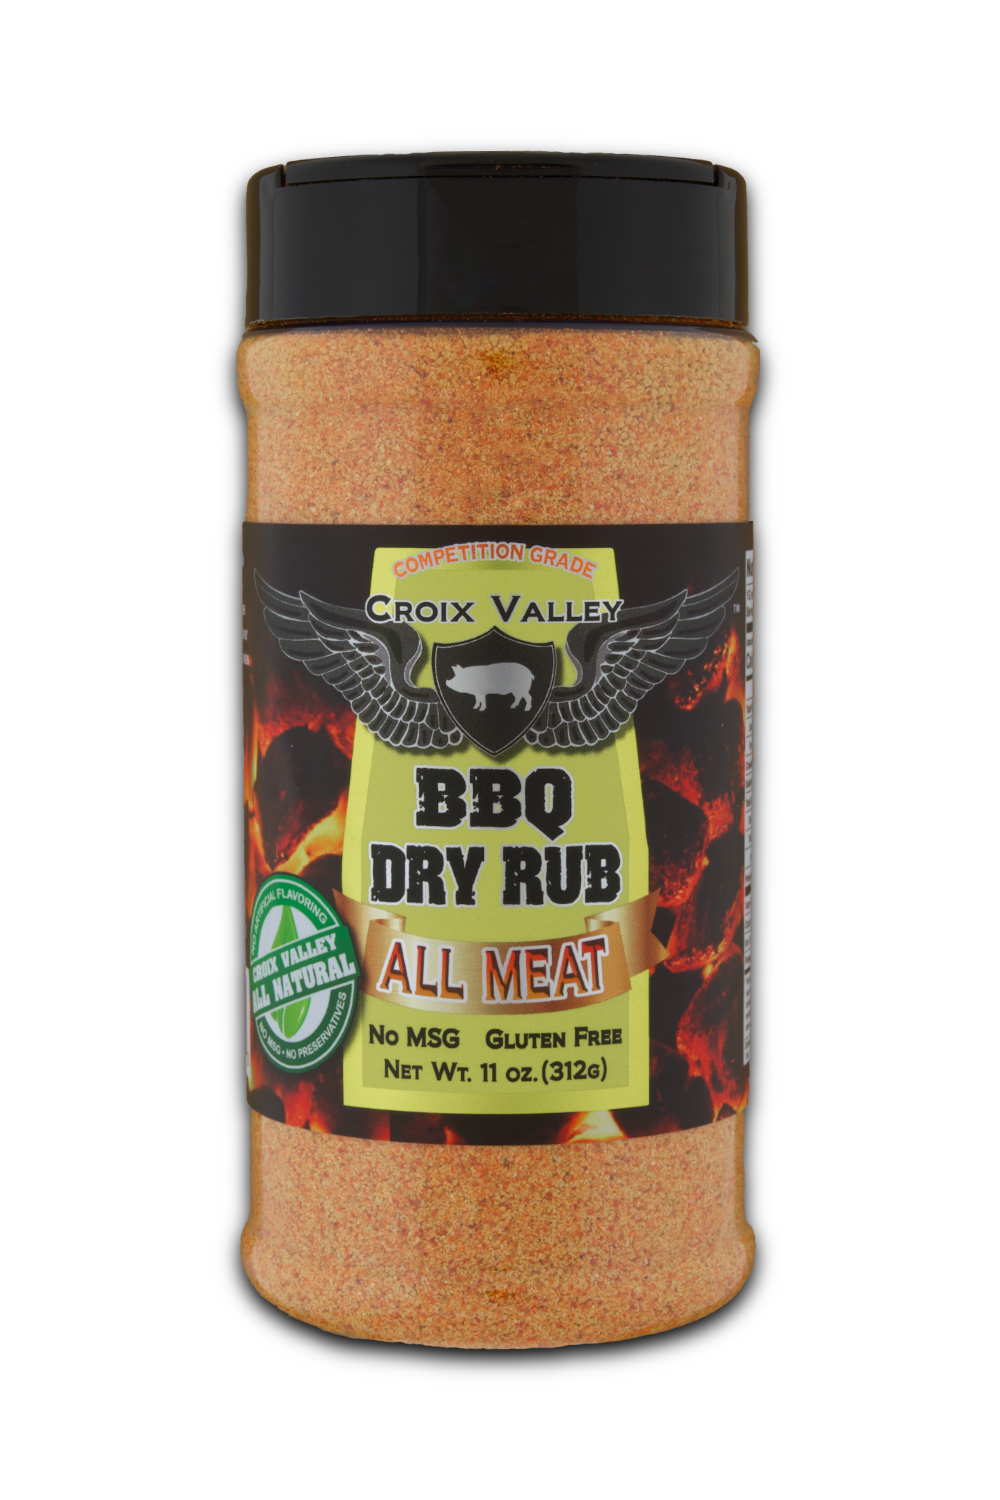 Croix Valley All Meat BBQ Dry Rub CV12 - 129803